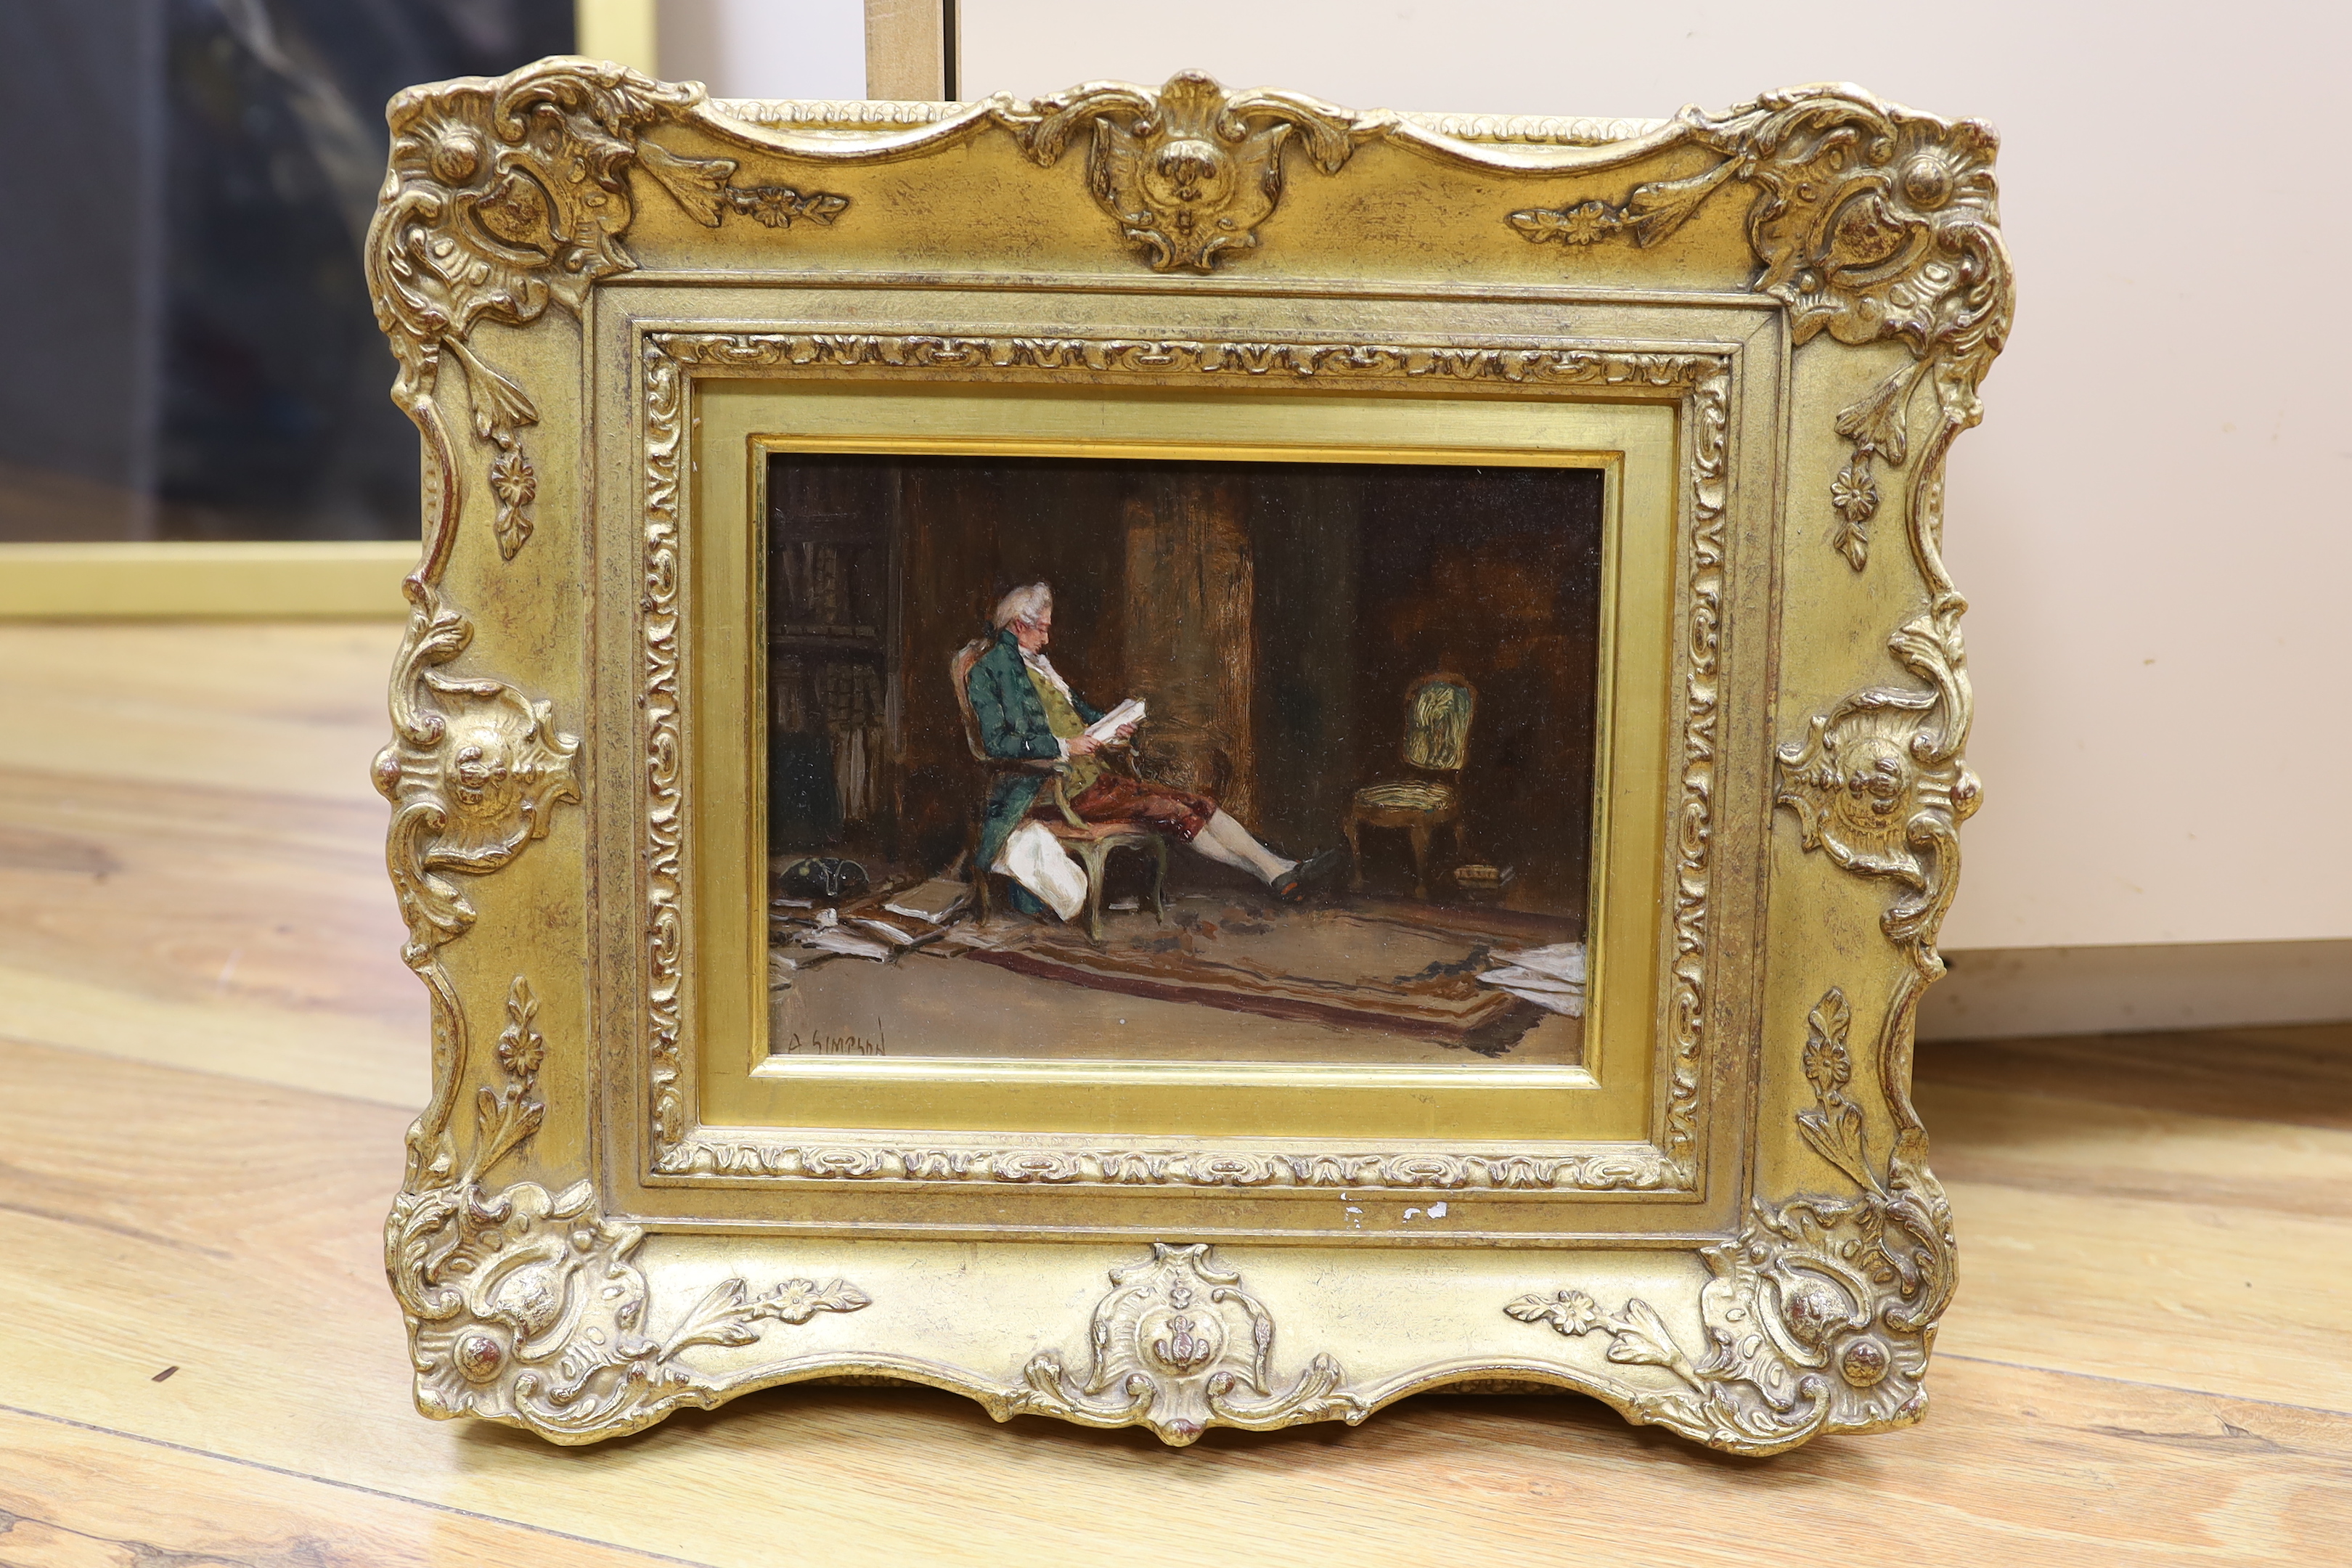 A. Simpson (c.1900), oil on panel, 18th century gentleman reading, signed, 14 x 19cm, ornate gilt frame